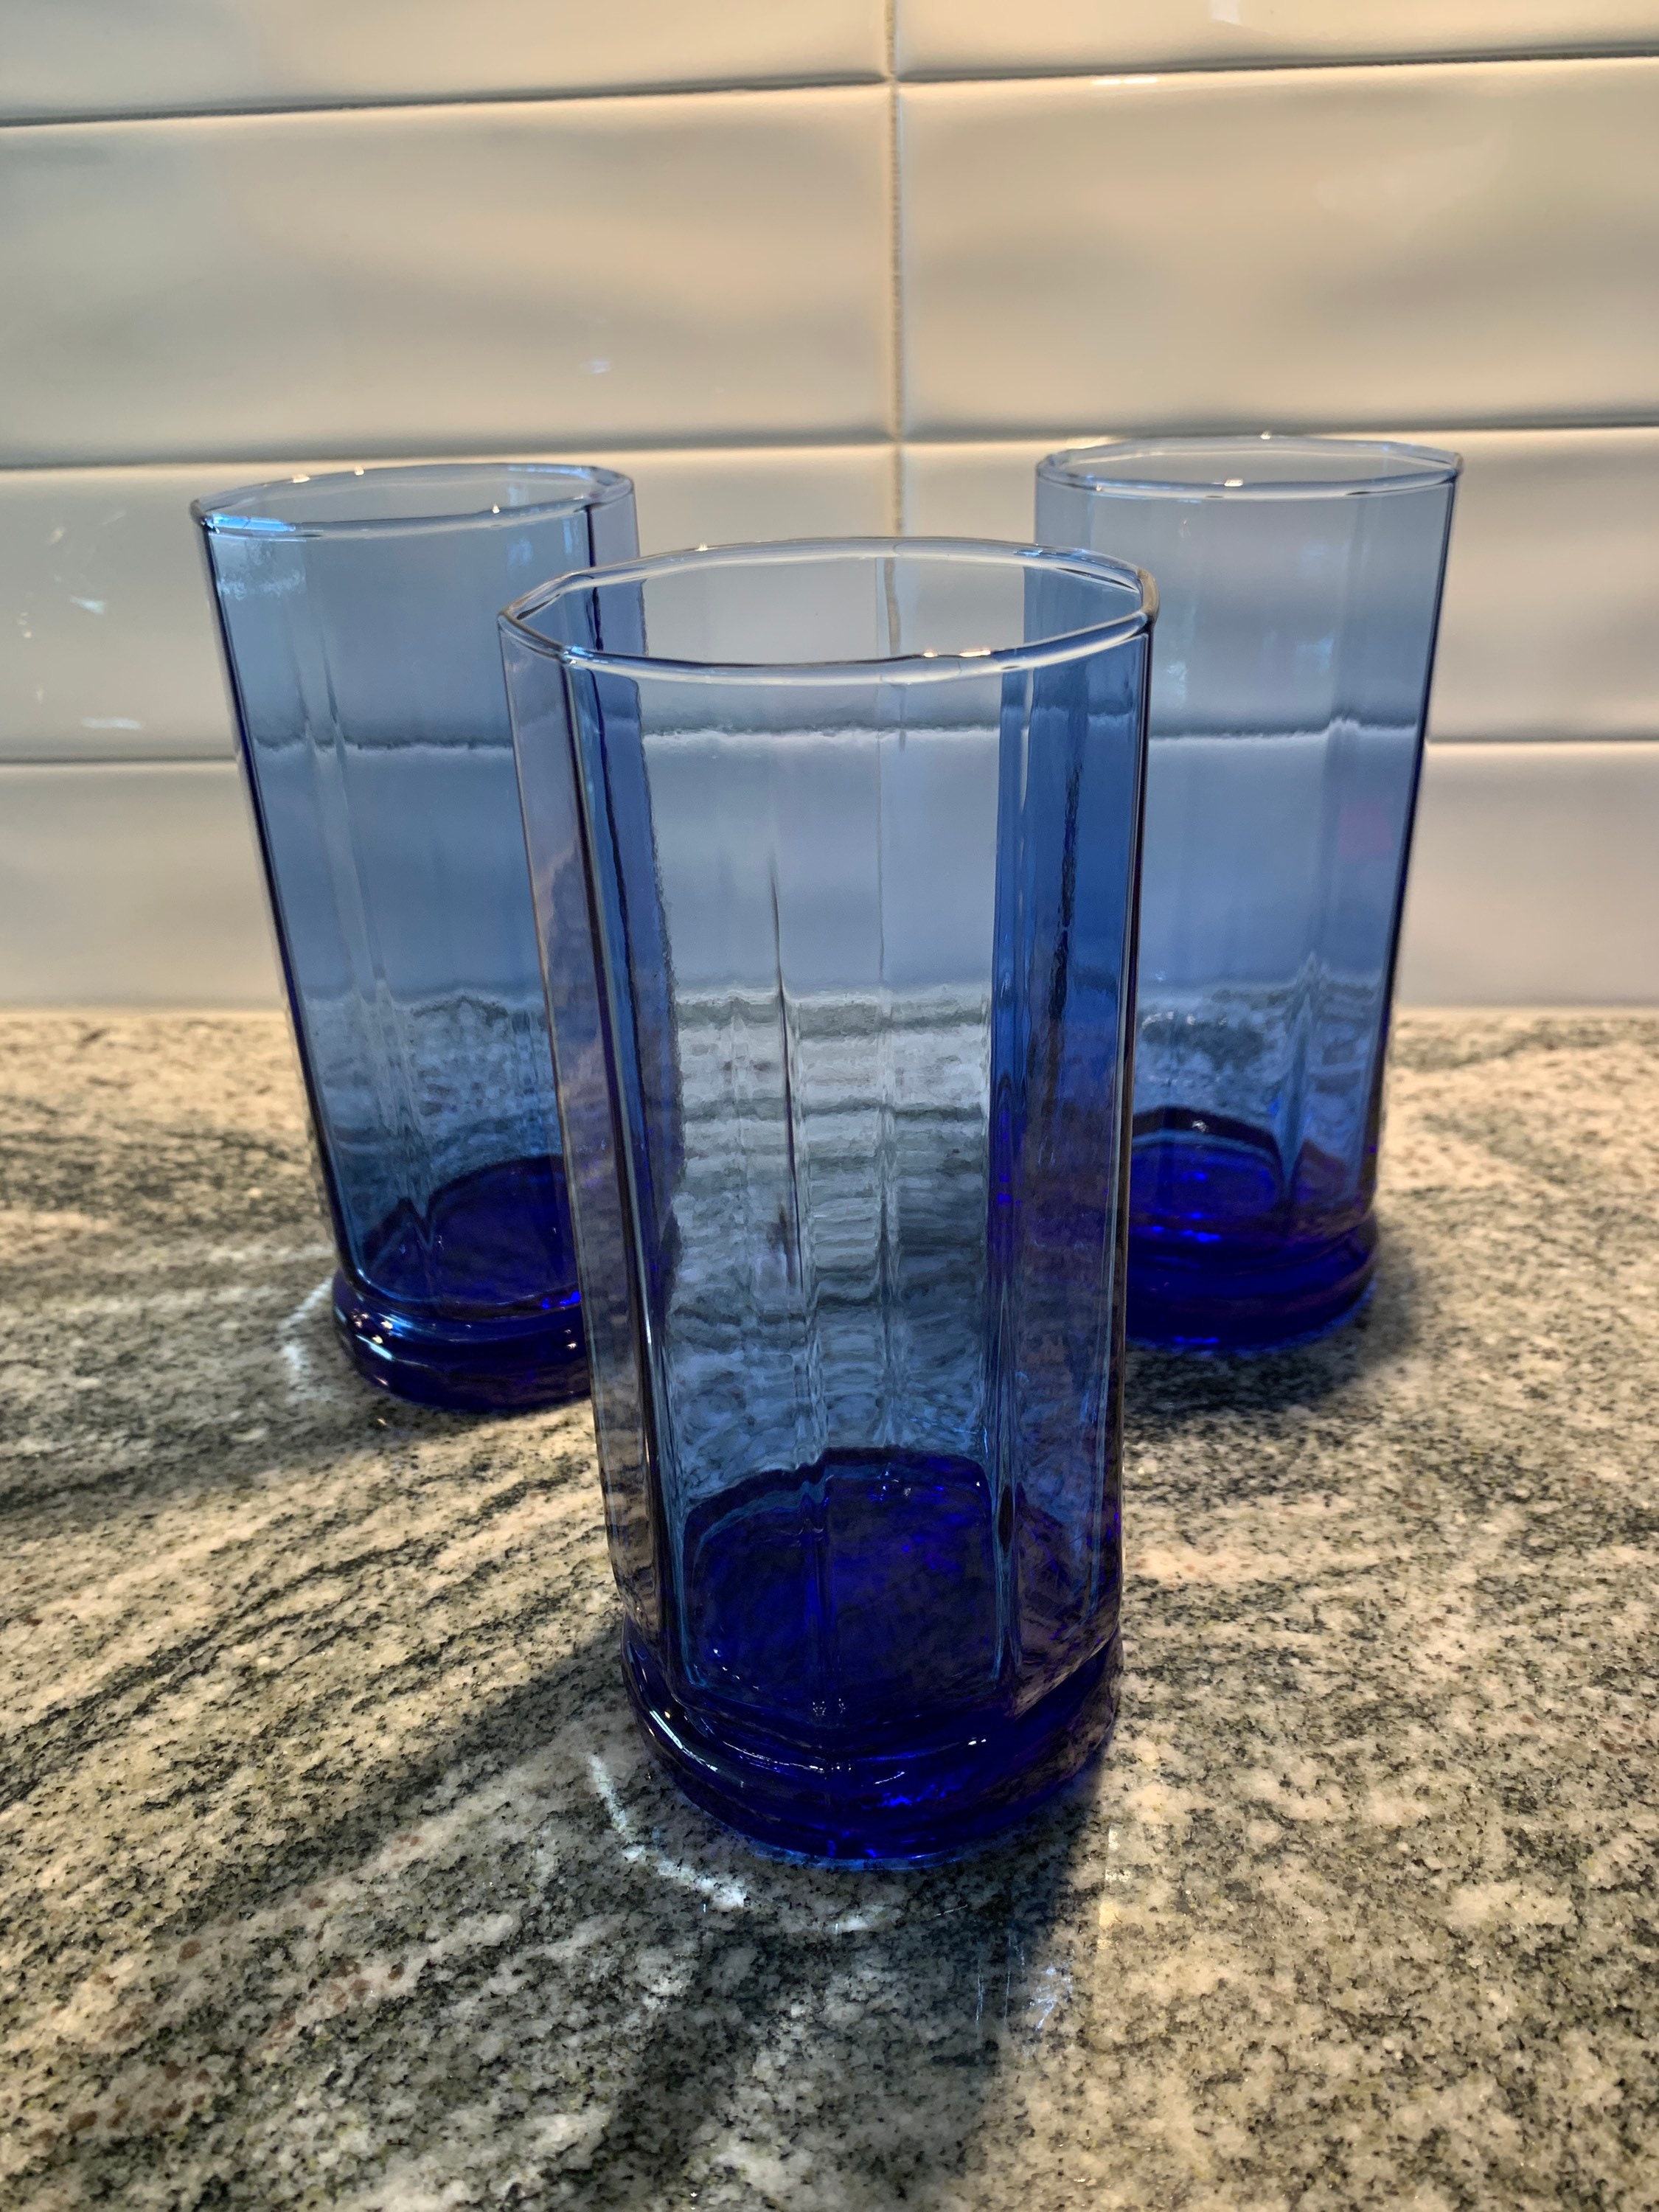 13 oz. Vintage Textured Smoke Blue Drinking Glasses (Set of 6)